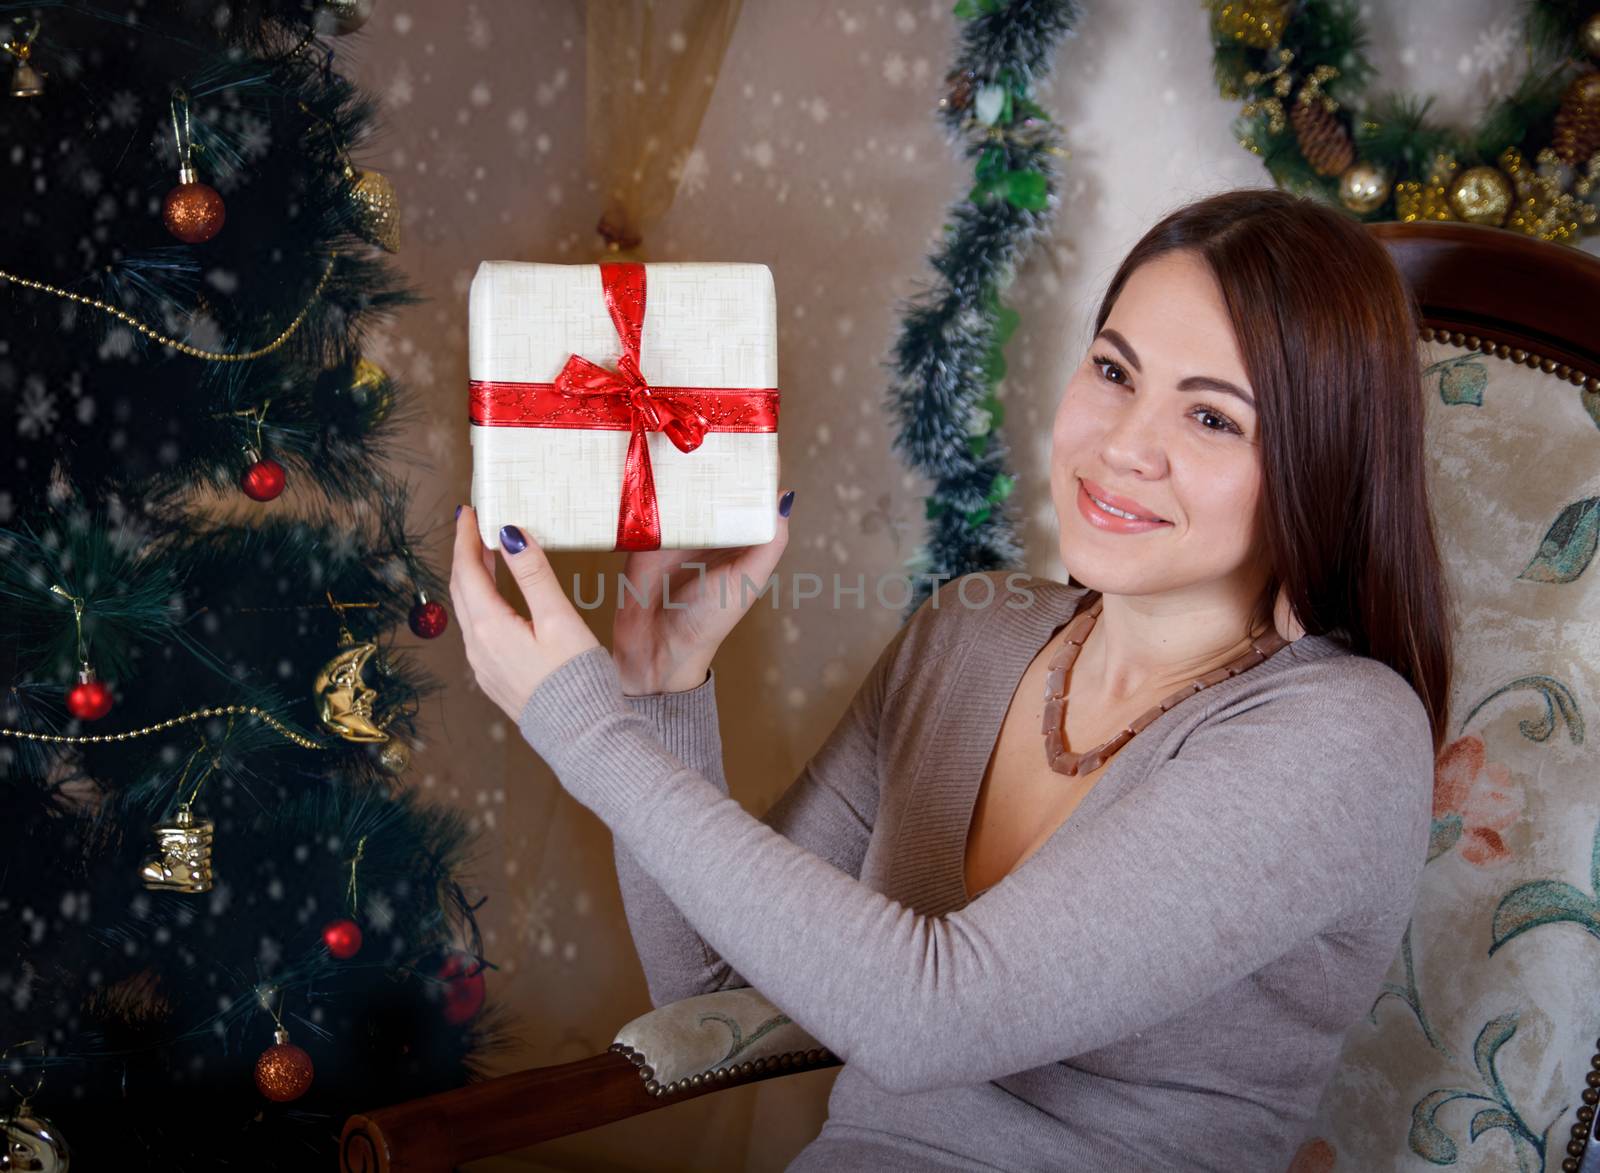 Pretty woman showing gift box under Christmas tree